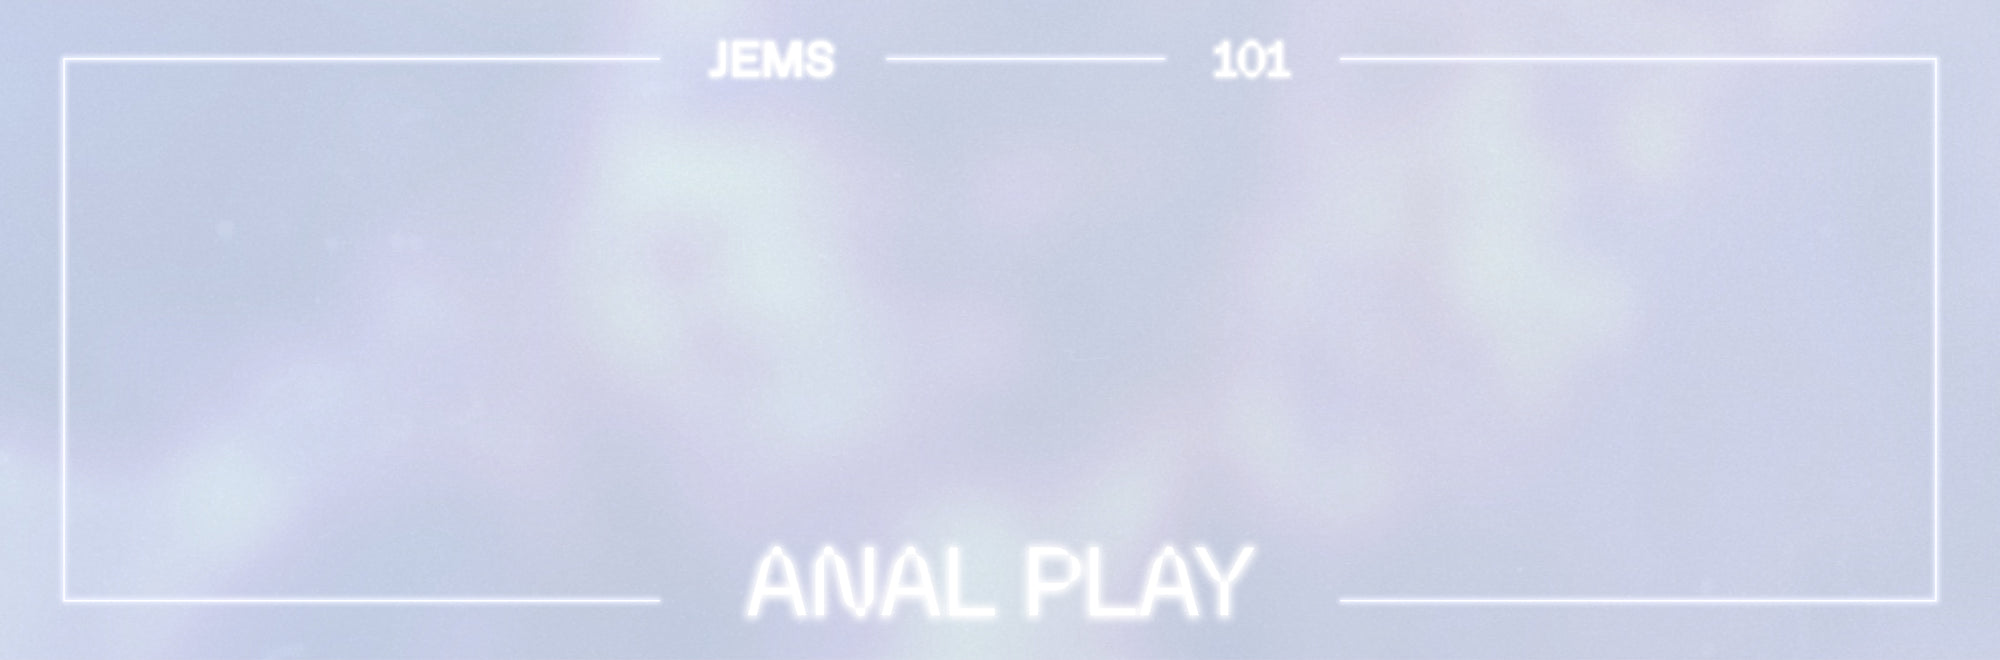 101: Anal Play